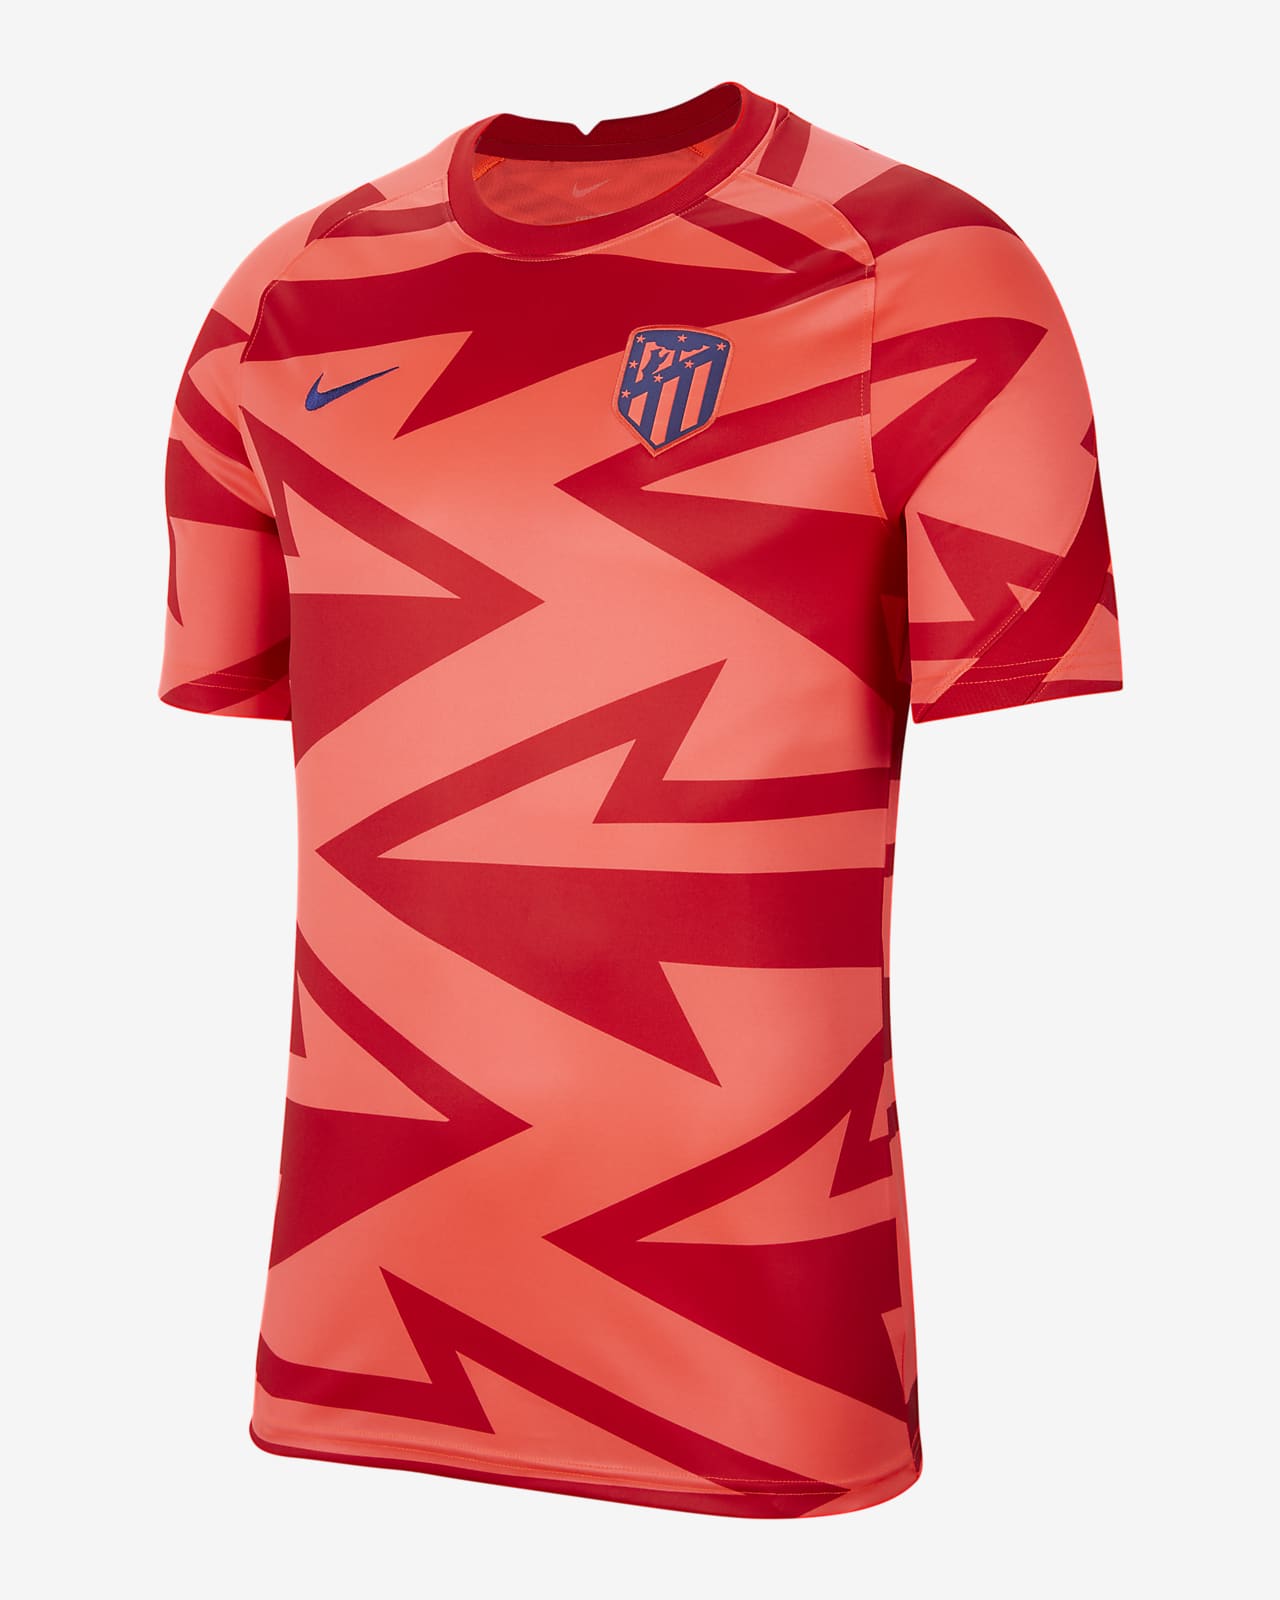 Dependiente celebracion Prosperar Atlético Madrid Men's Pre-Match Short-Sleeve Soccer Top. Nike.com